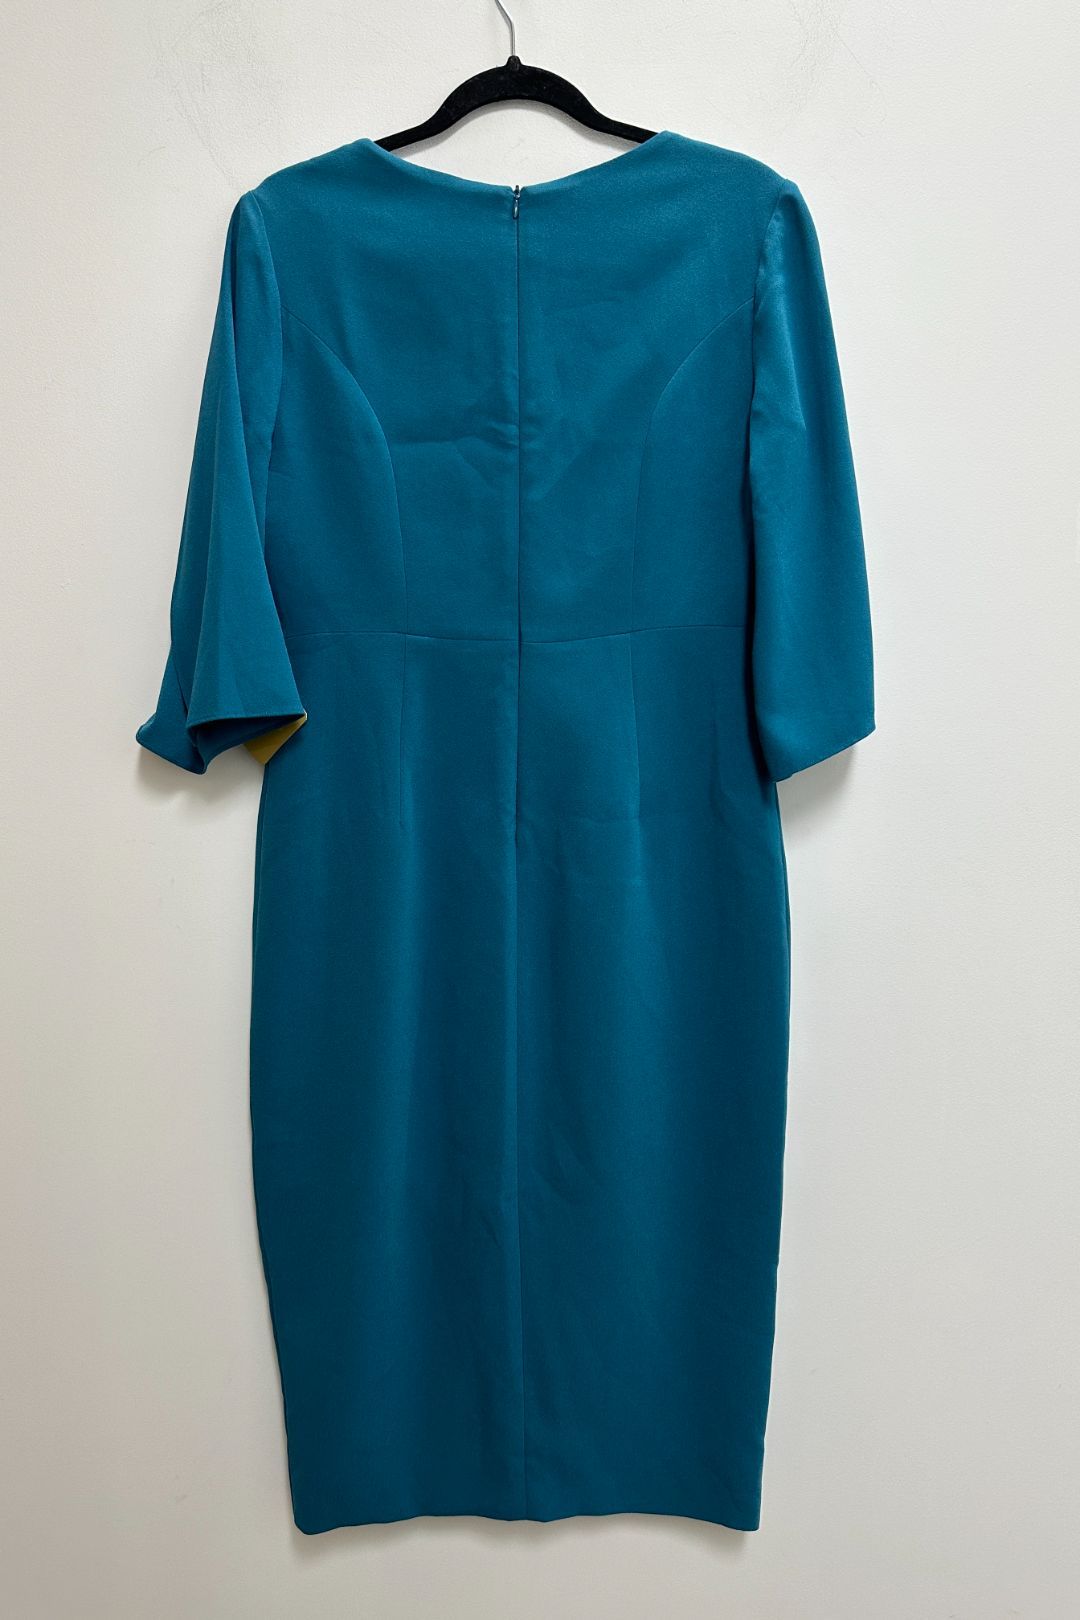 Anthea Crawford Malina Ocean Blue Midi Dress